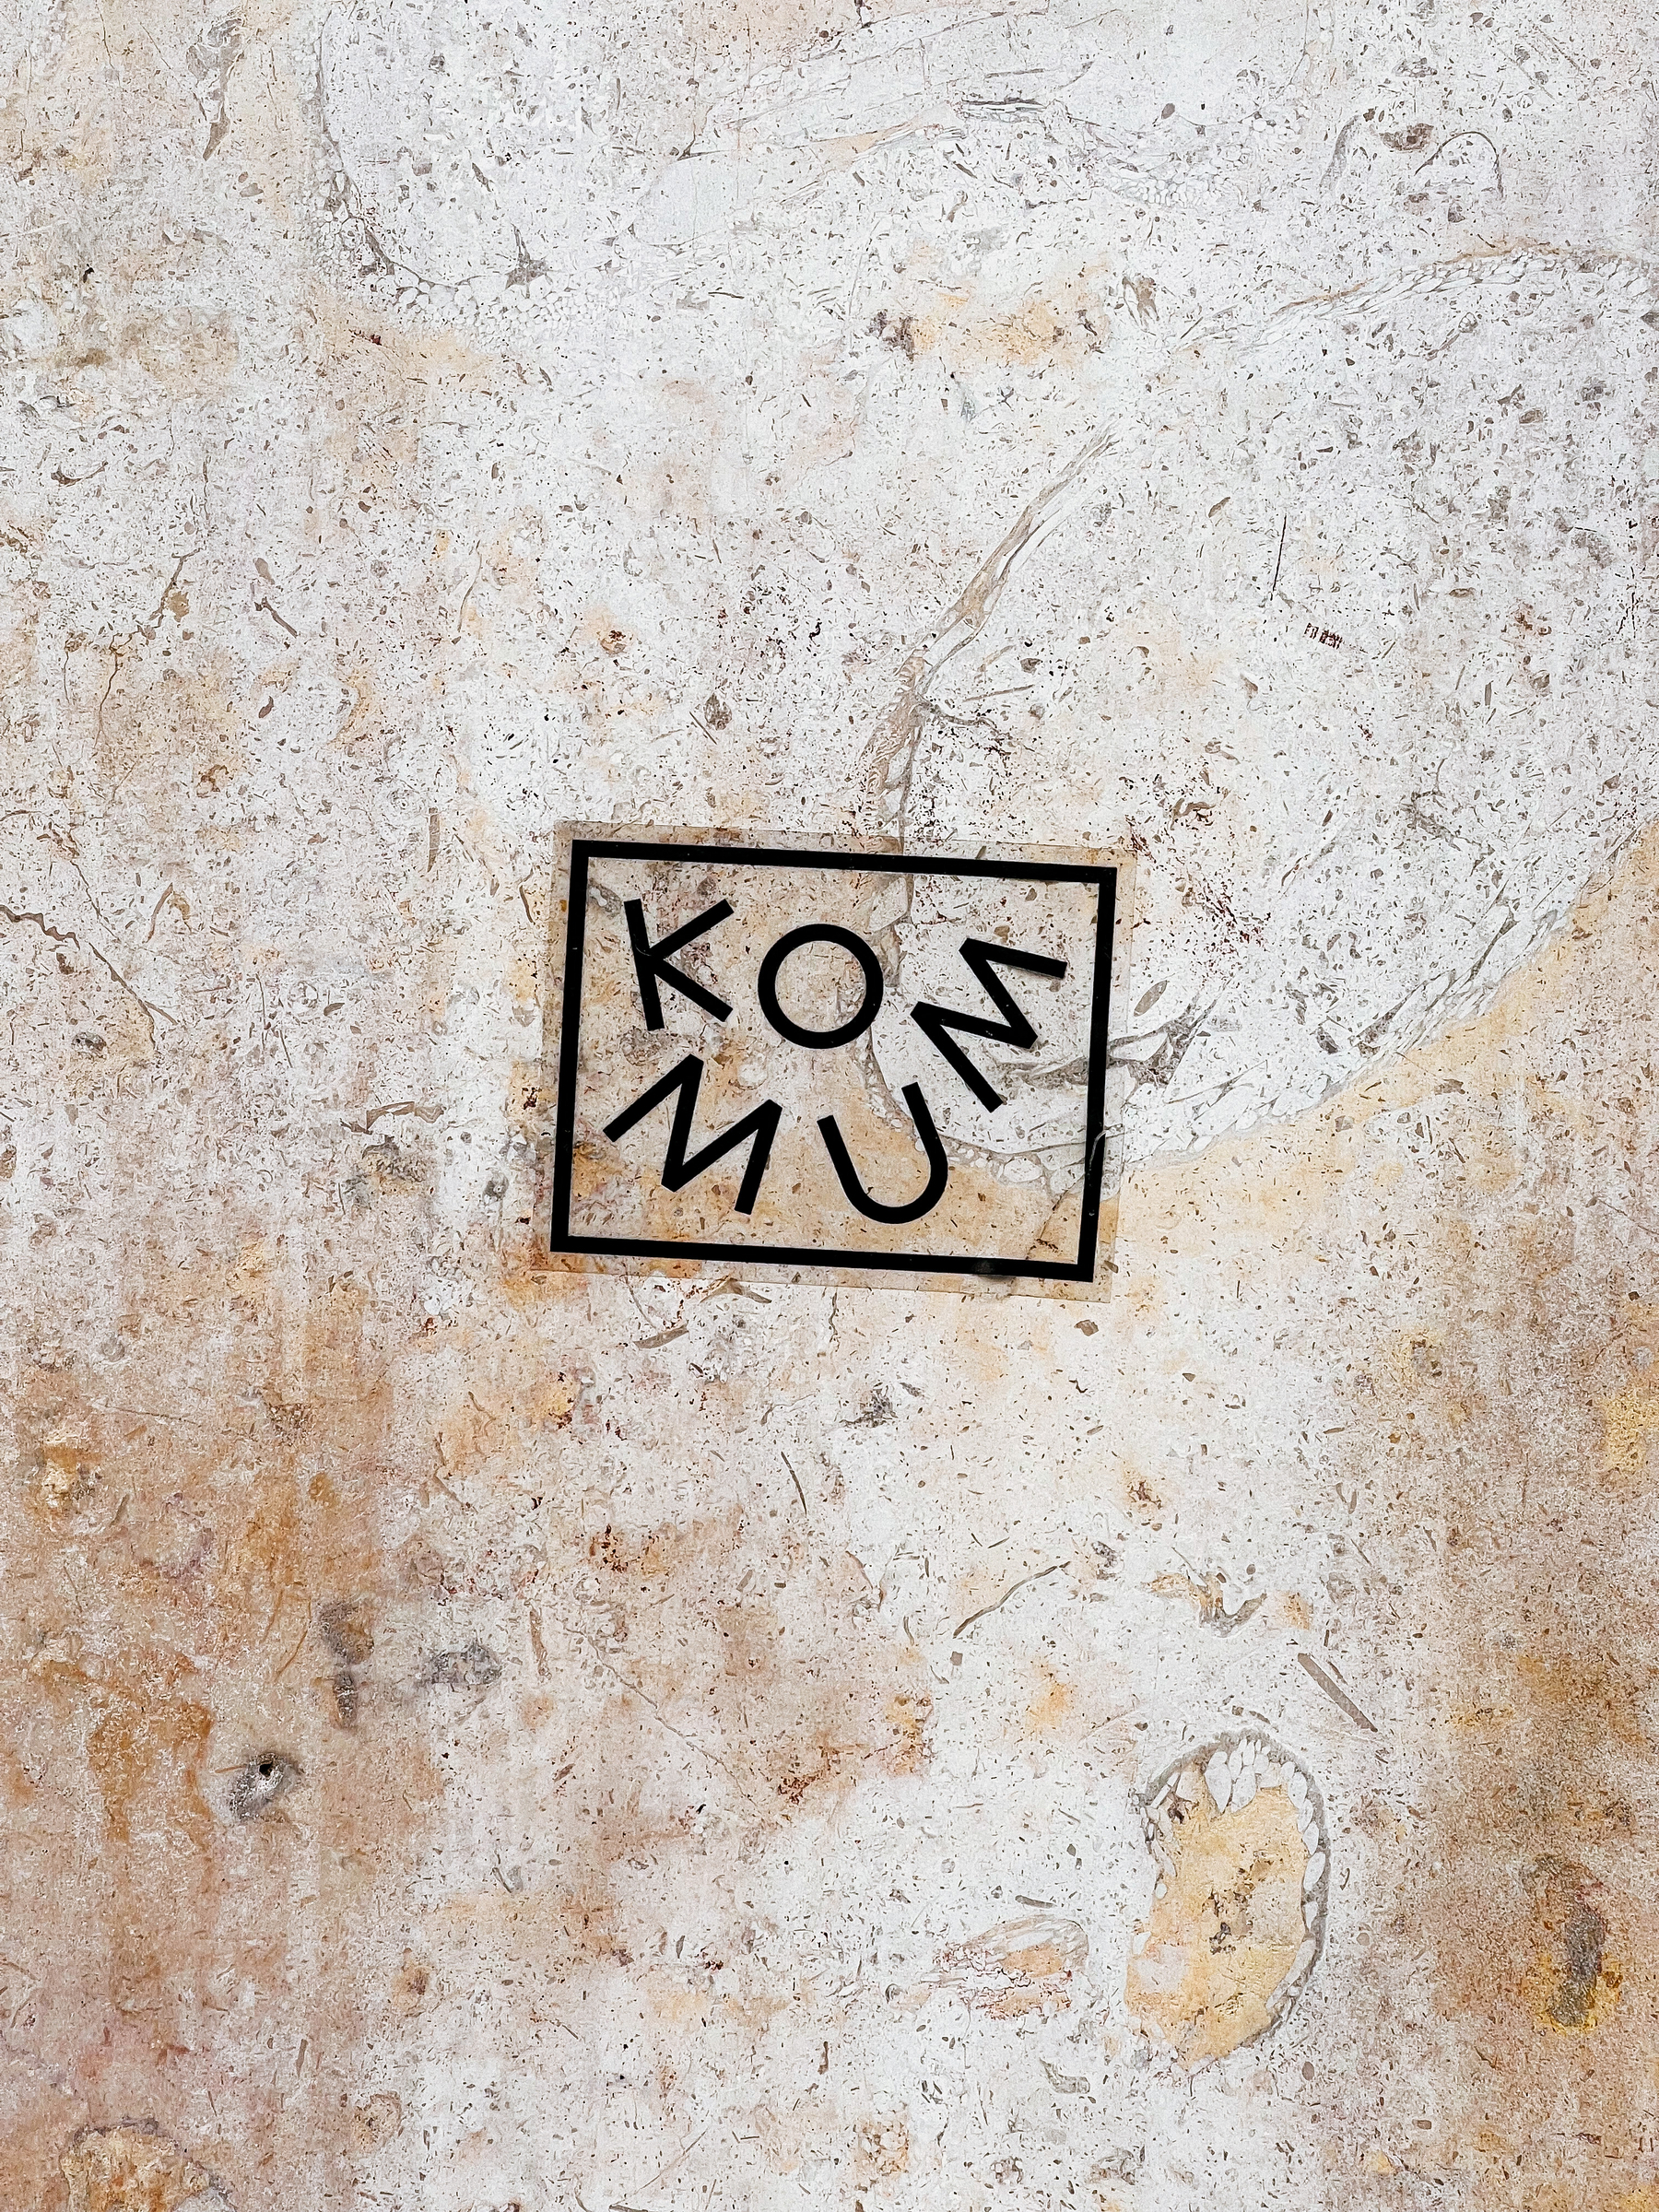 Sticker with the word “komum”